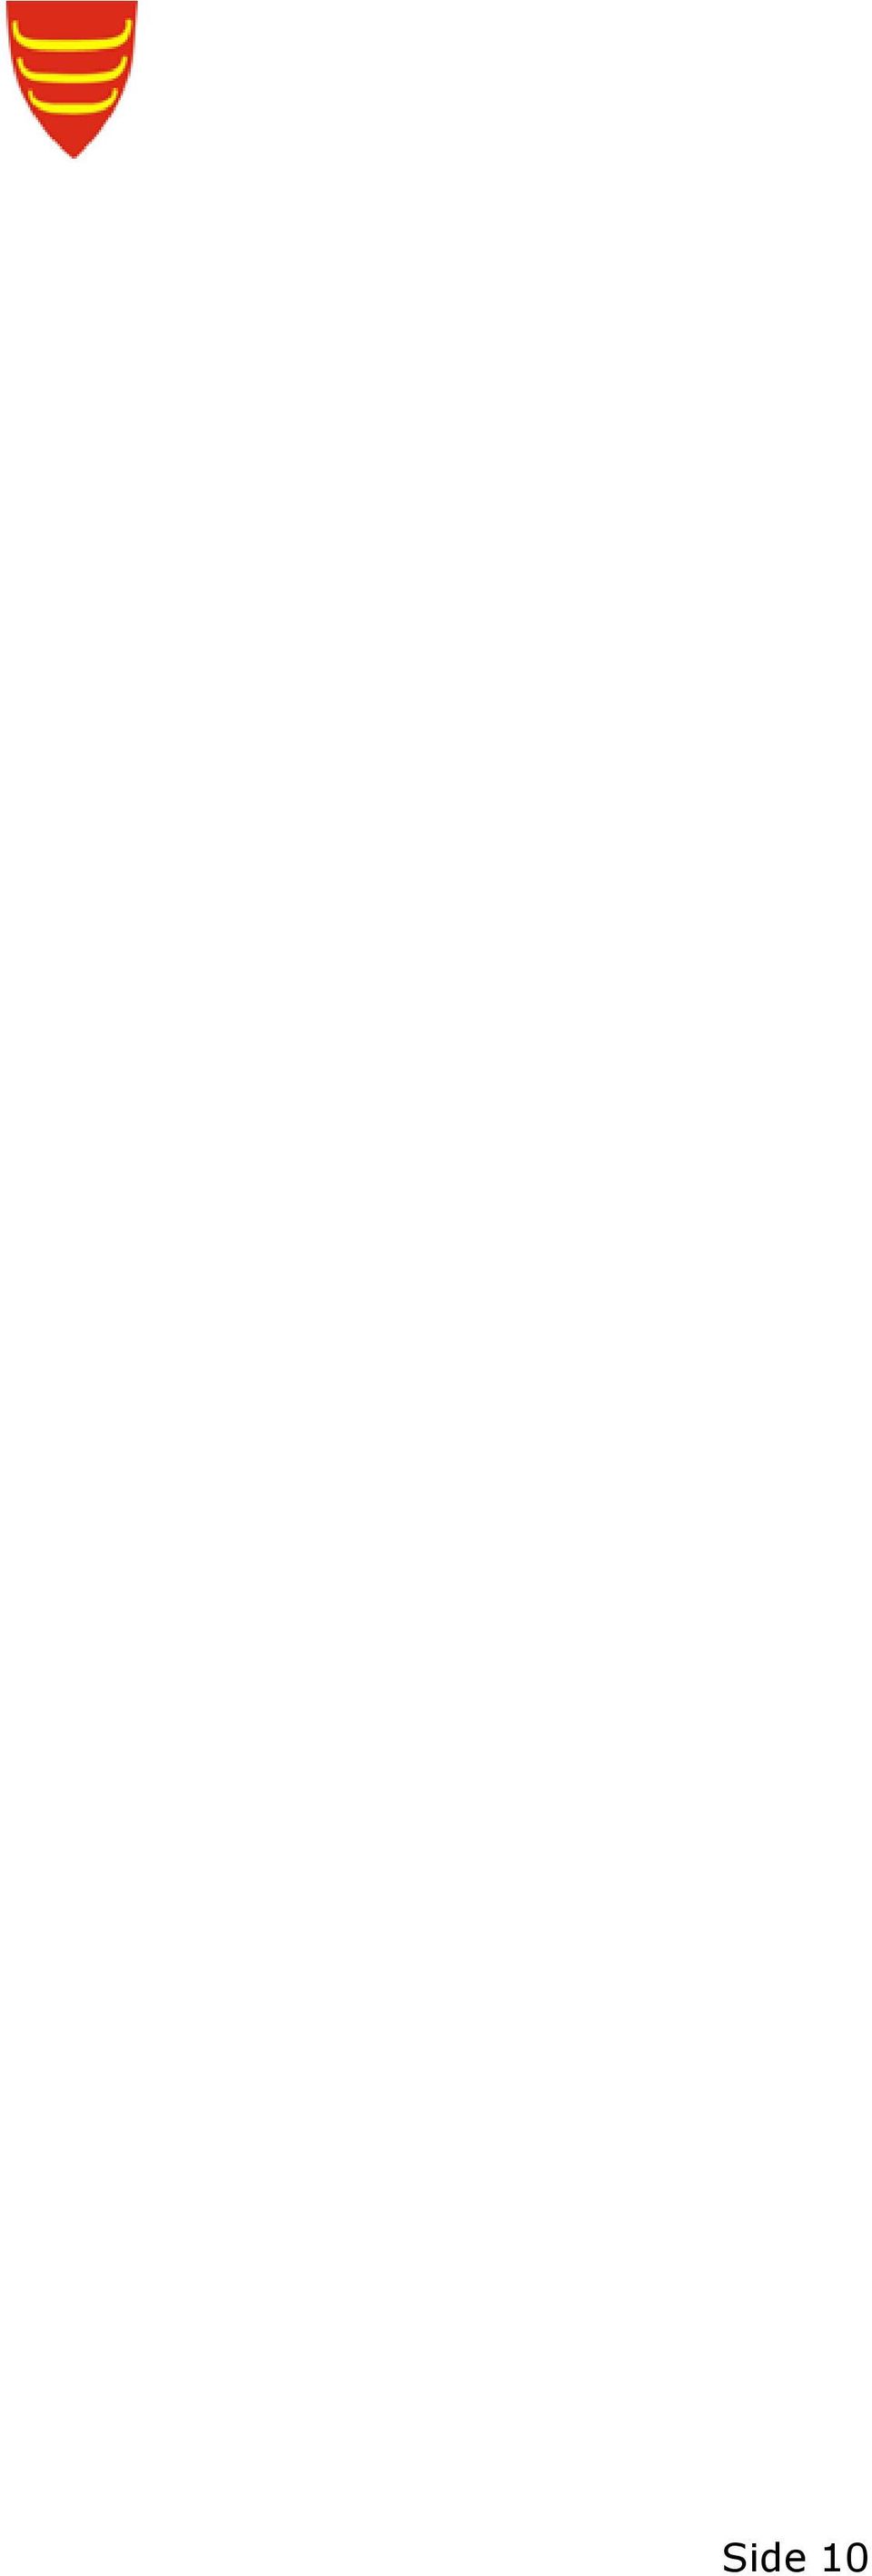 22.01.2014 Tiltak for bolyst-ungd 2014 Rådmannens forslag til vedtak Saksansvarlig: Anna Oliva Taksgård Saken oversendes ungdomsrådet uten innstilling.